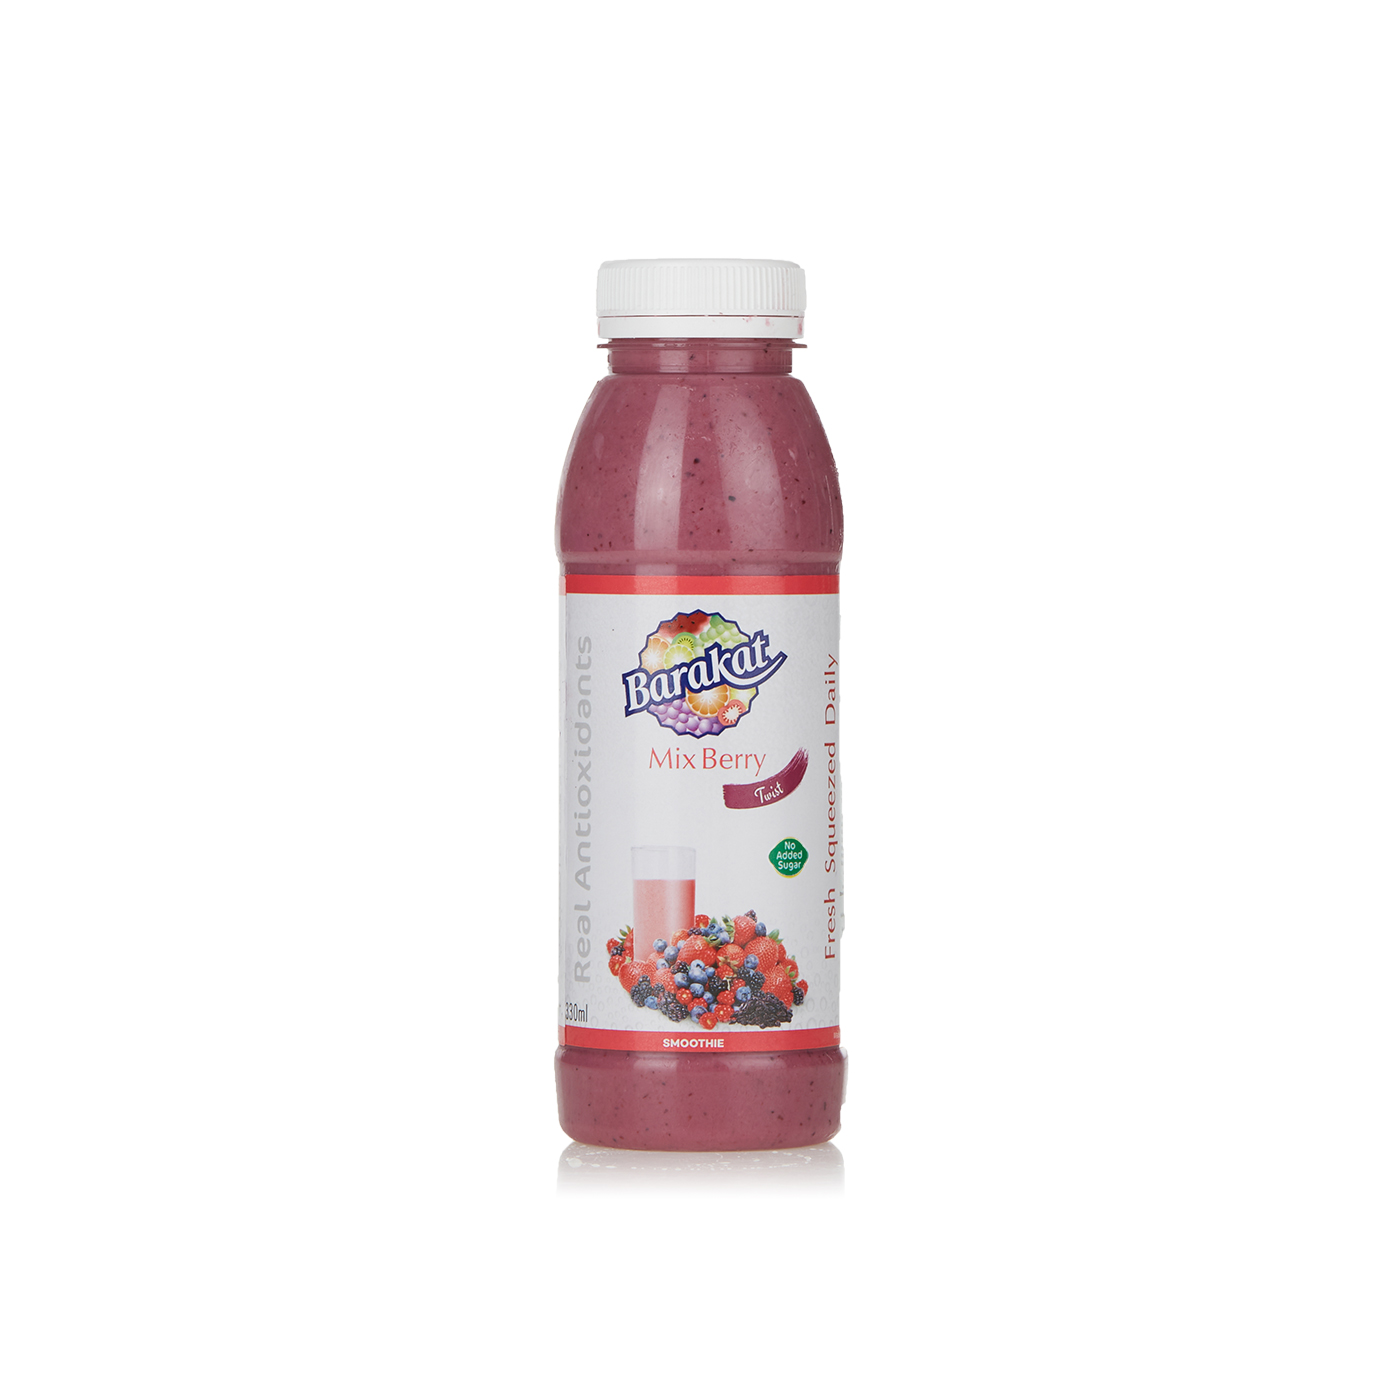 Barakat mix berry twist smoothie 330ml - Spinneys UAE